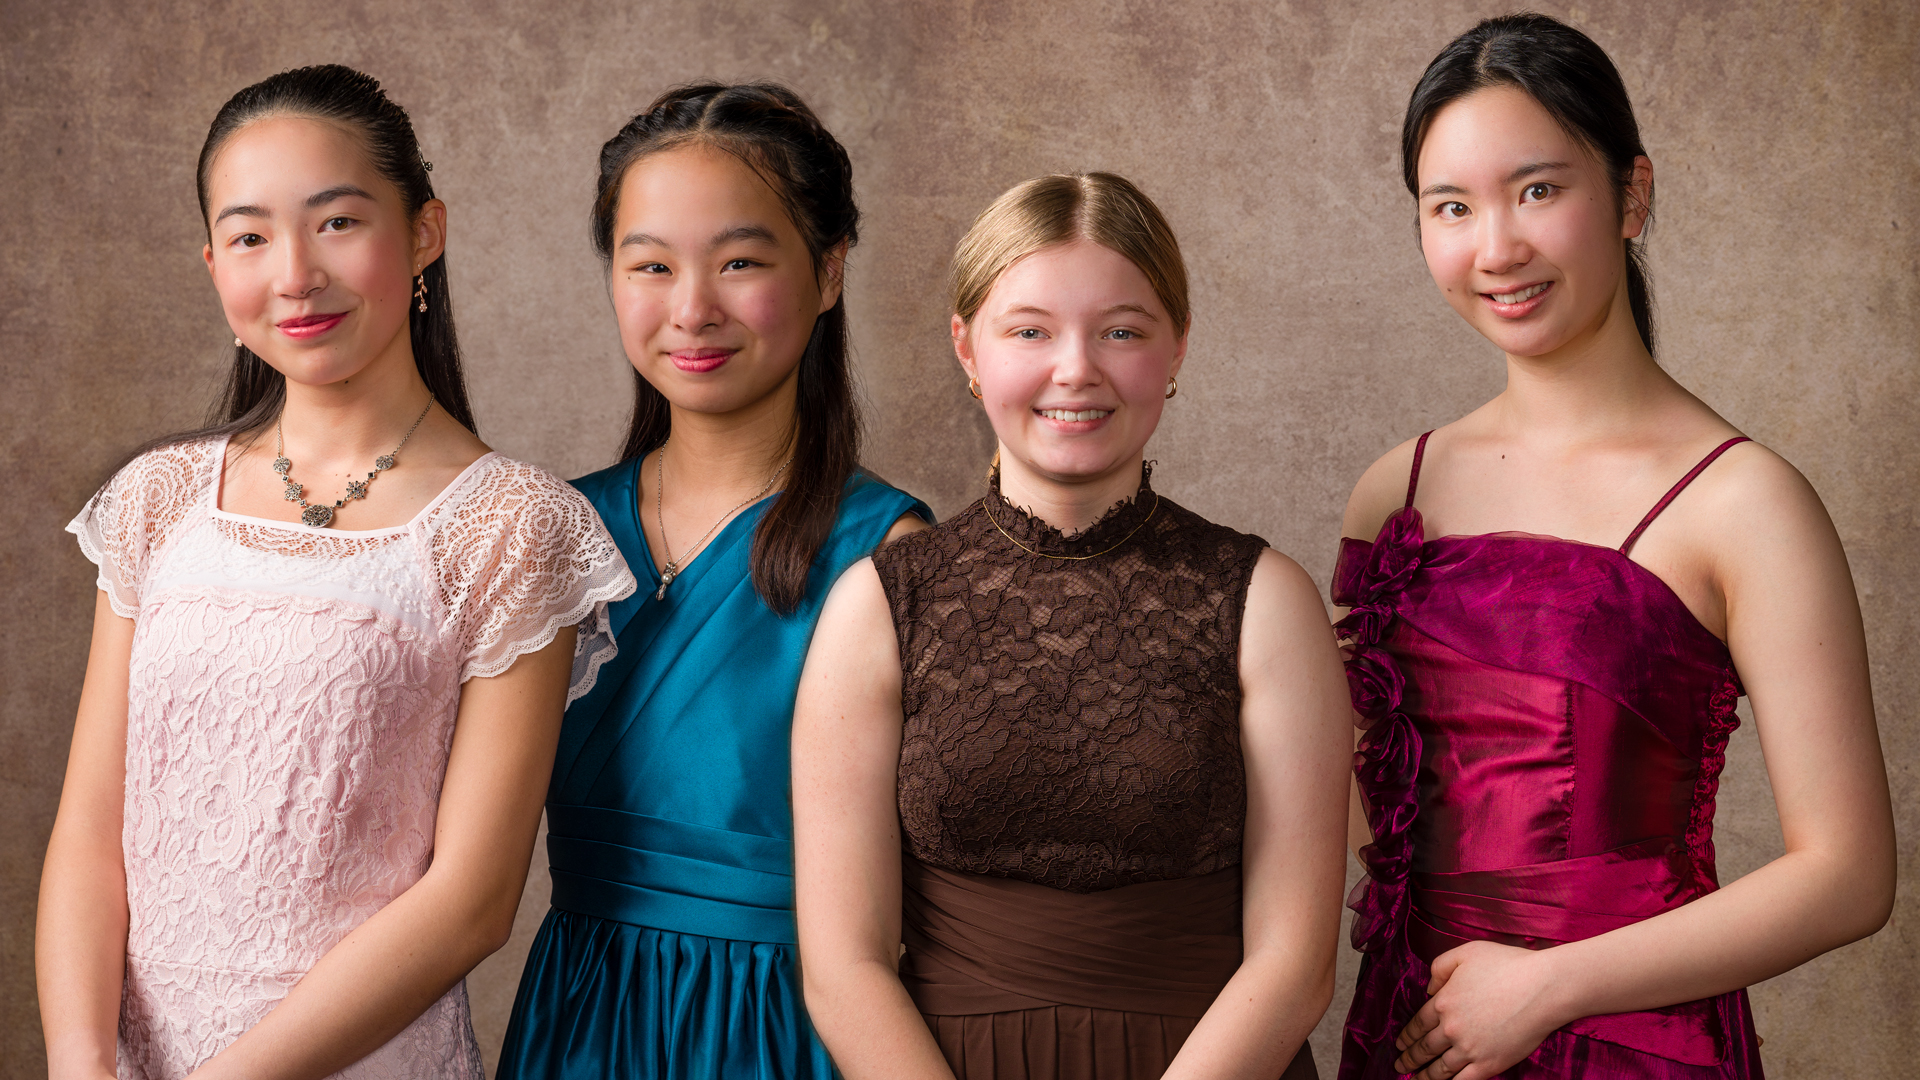 Four high school girls pose, smiling in formal wear